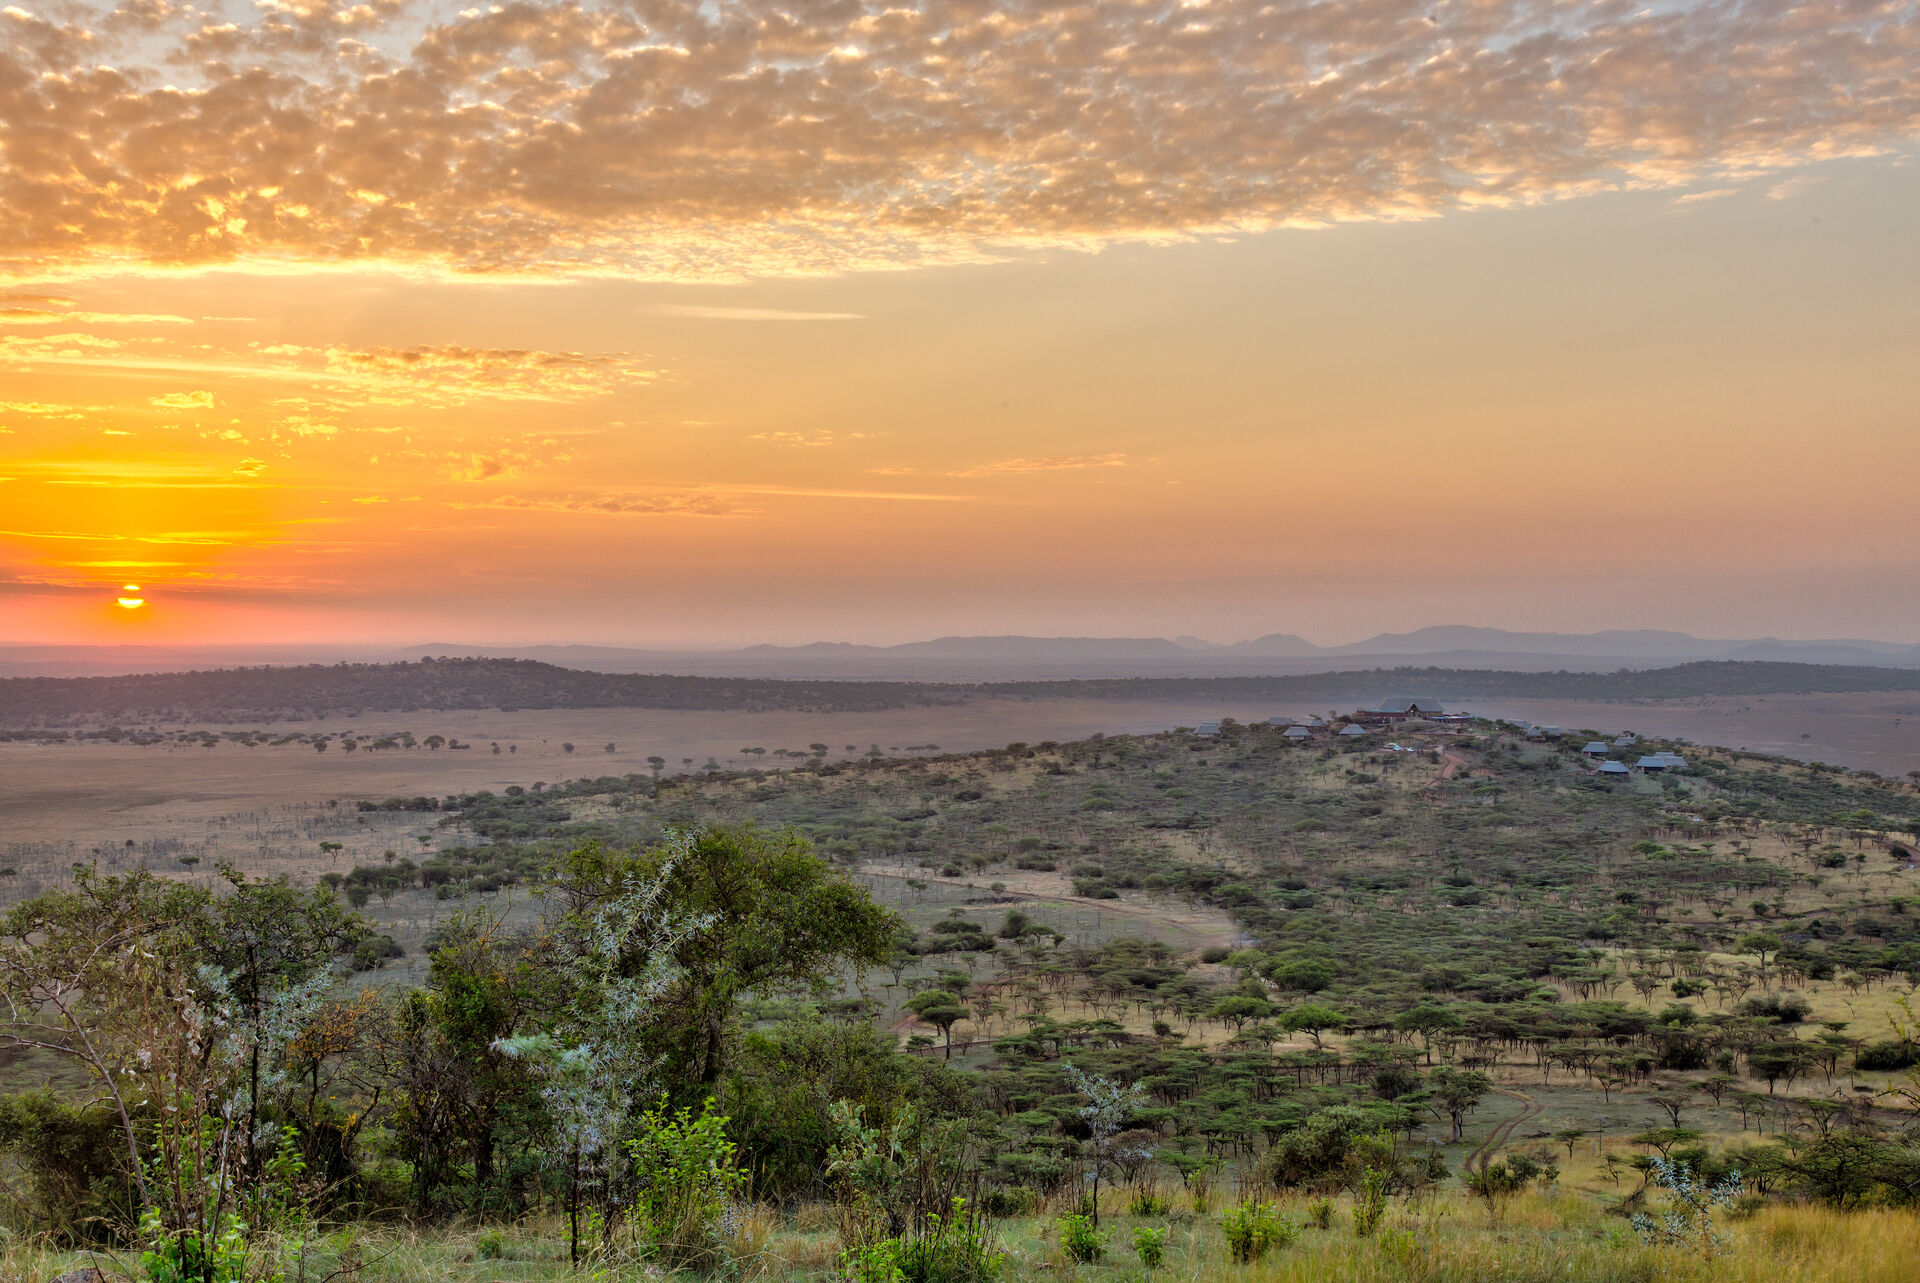 Western Serengeti – Recommended Apr-Jun